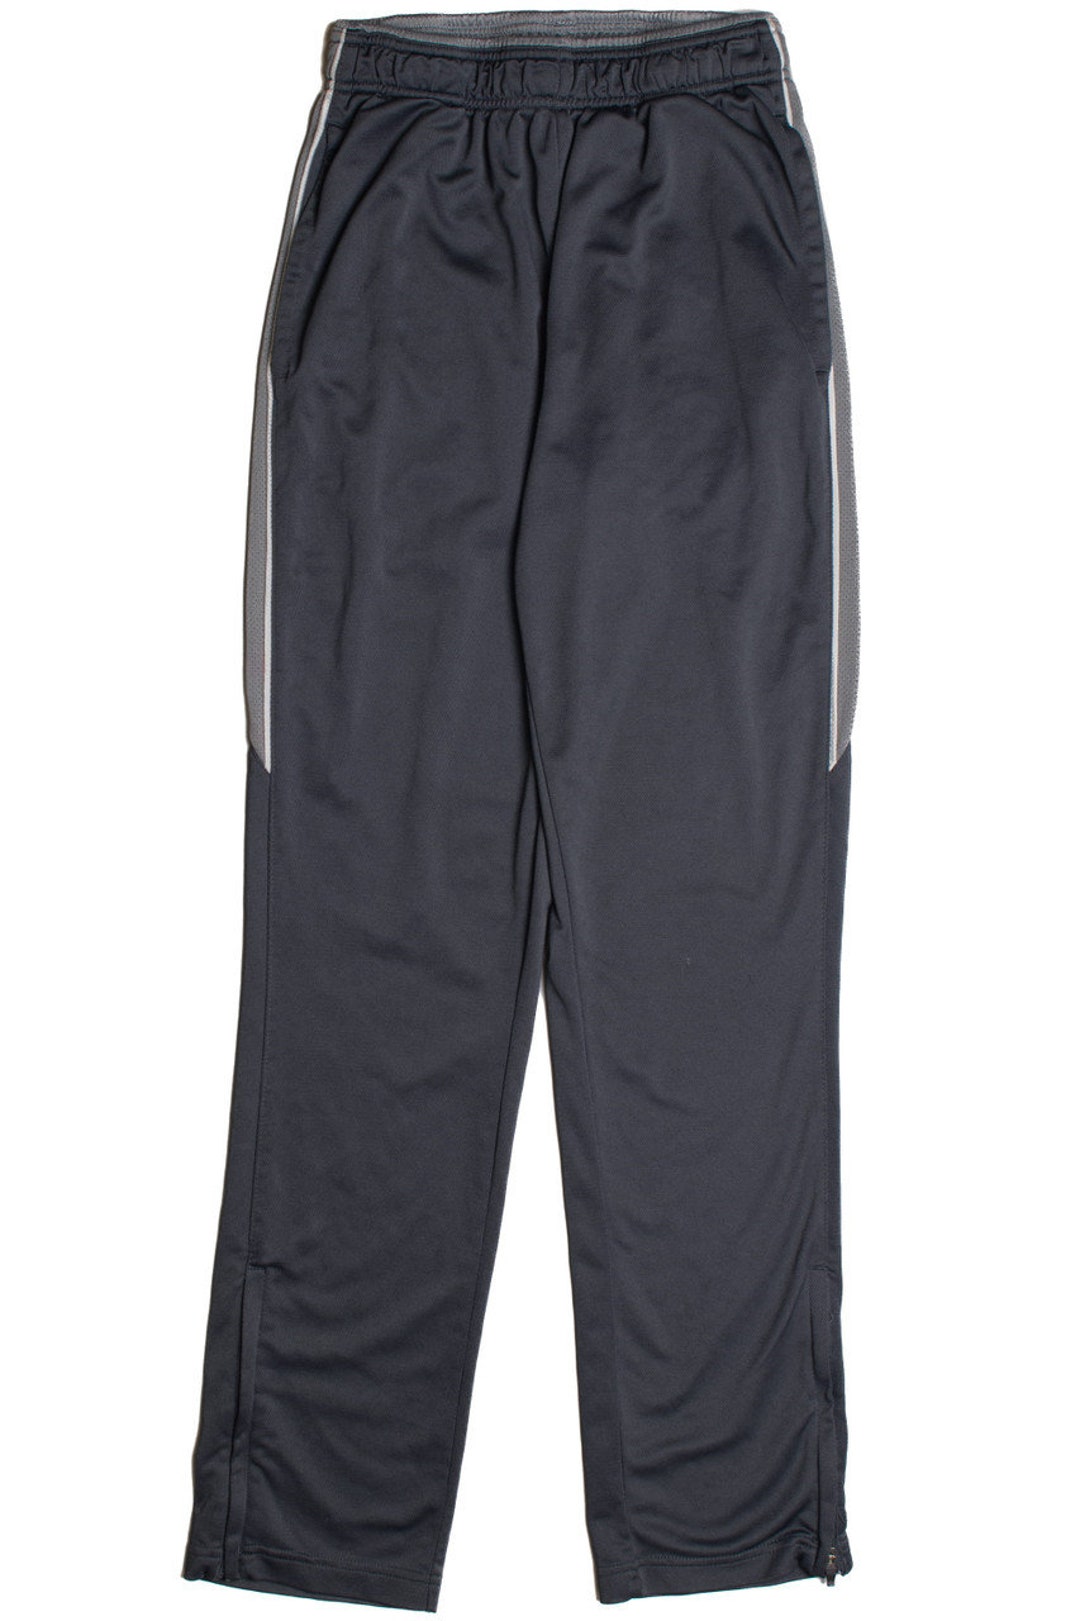 PUMA 530098-01 Iconic T7 Track Pants PT | Black Men's Athletic Pant | YOOX